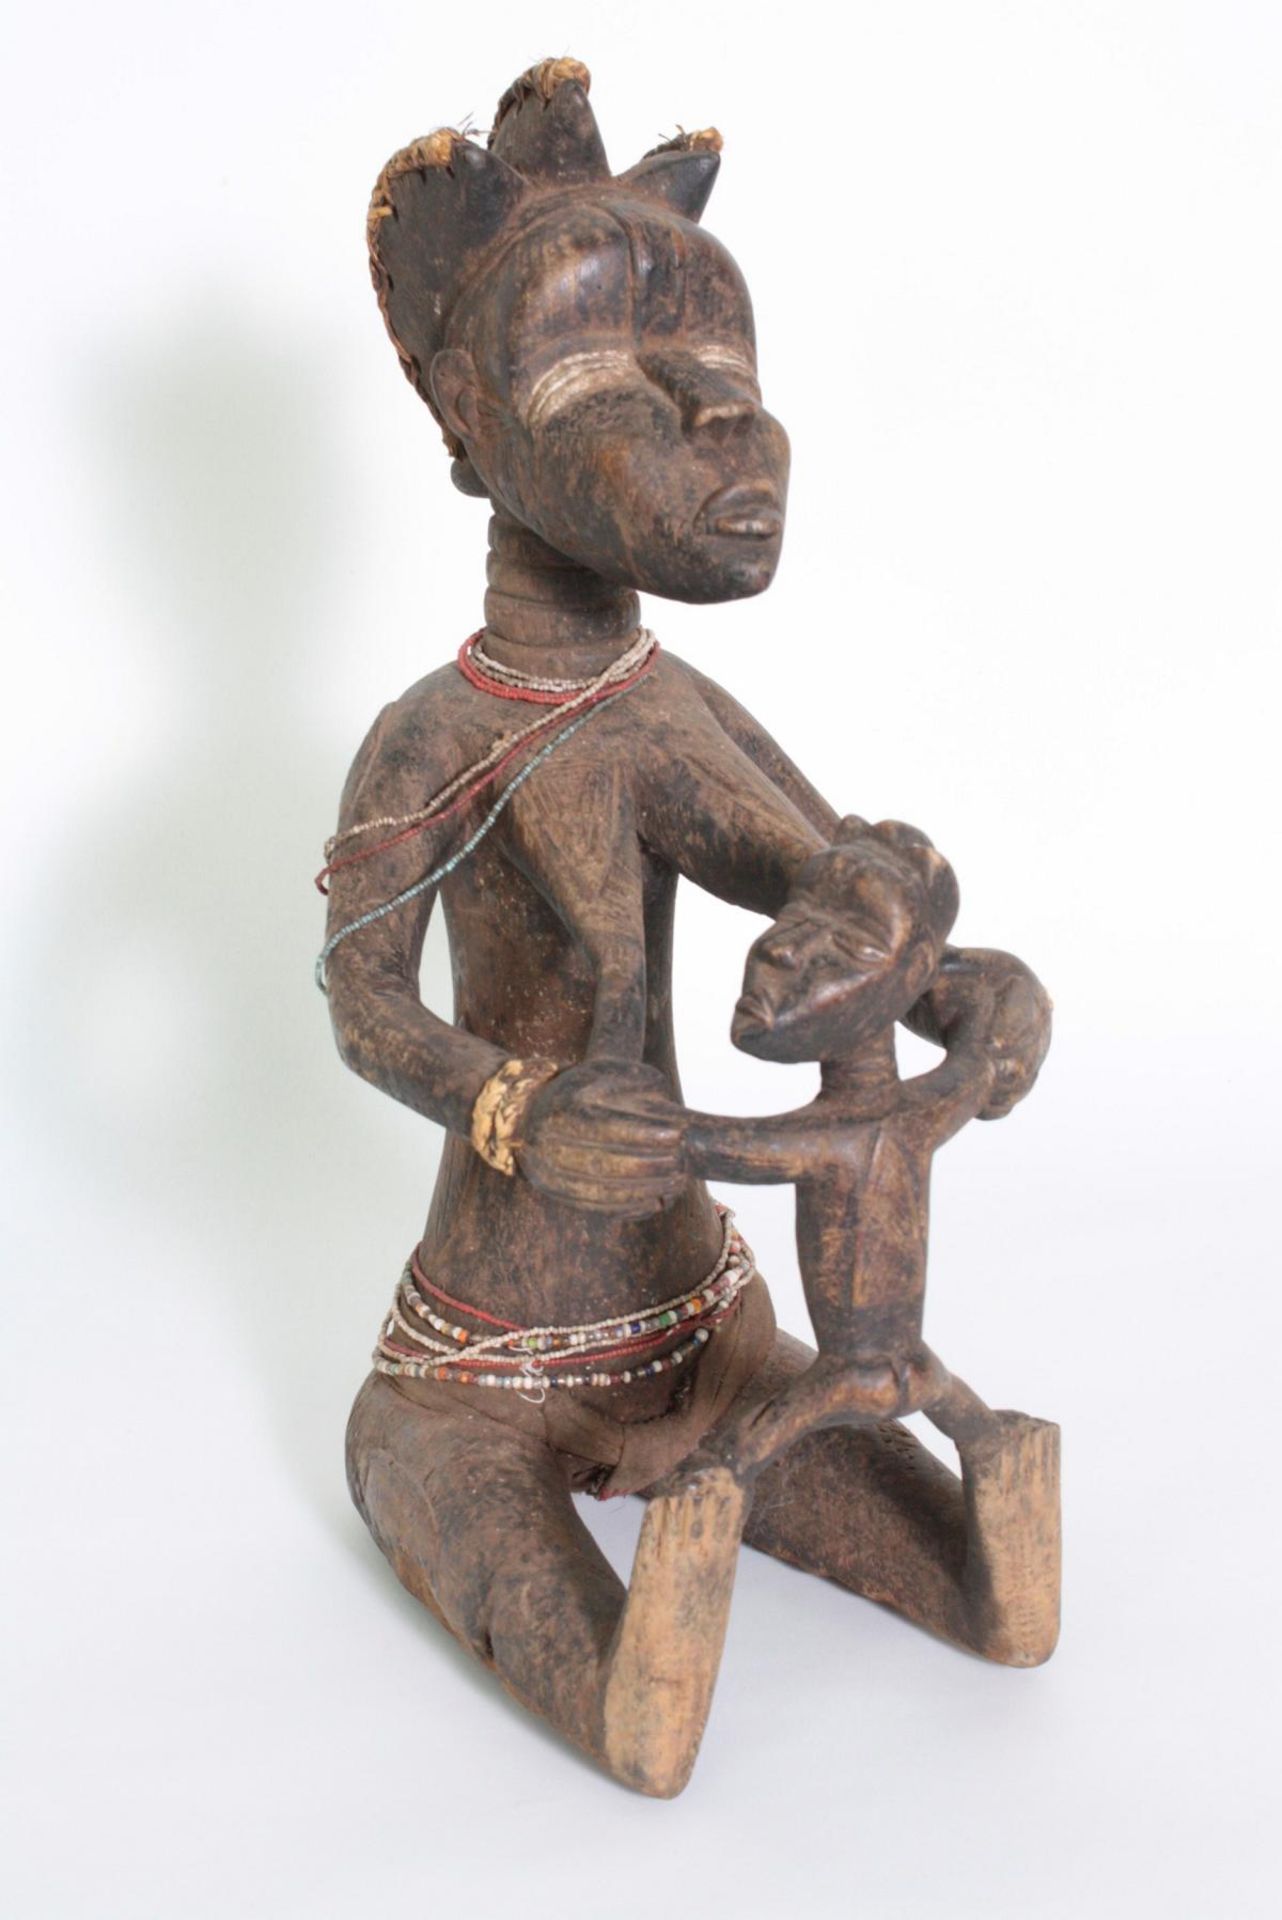 Mutter-Kind-Figur, Dan, Elfenbeinküste, Liberia, 1. Hälfte 20. Jh.Holz, braune Kruste Patina,